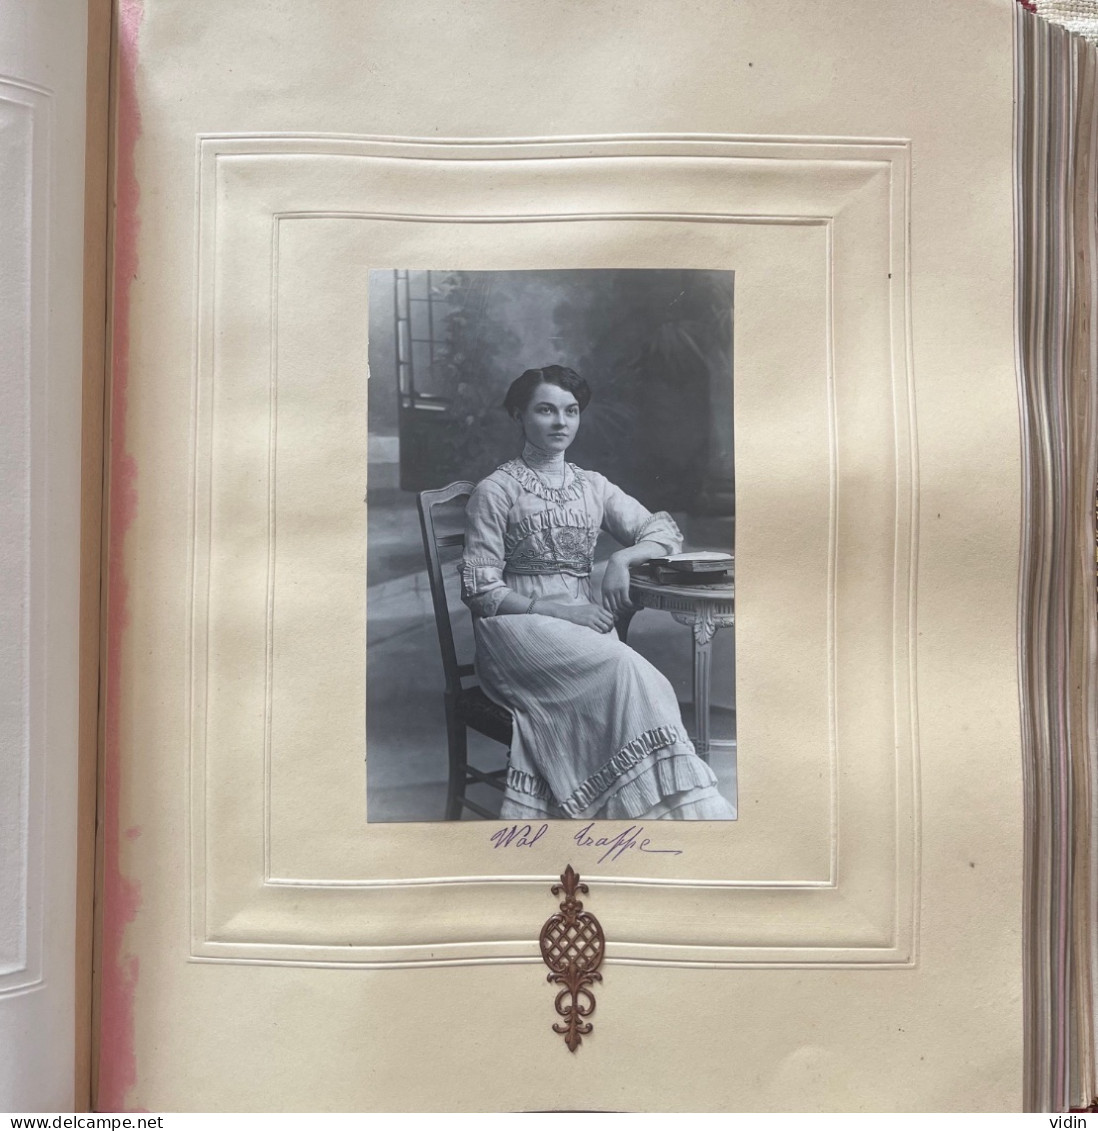 Superbe album cuir 1900 photos famille DESNAUX - RARE EN CET ETAT